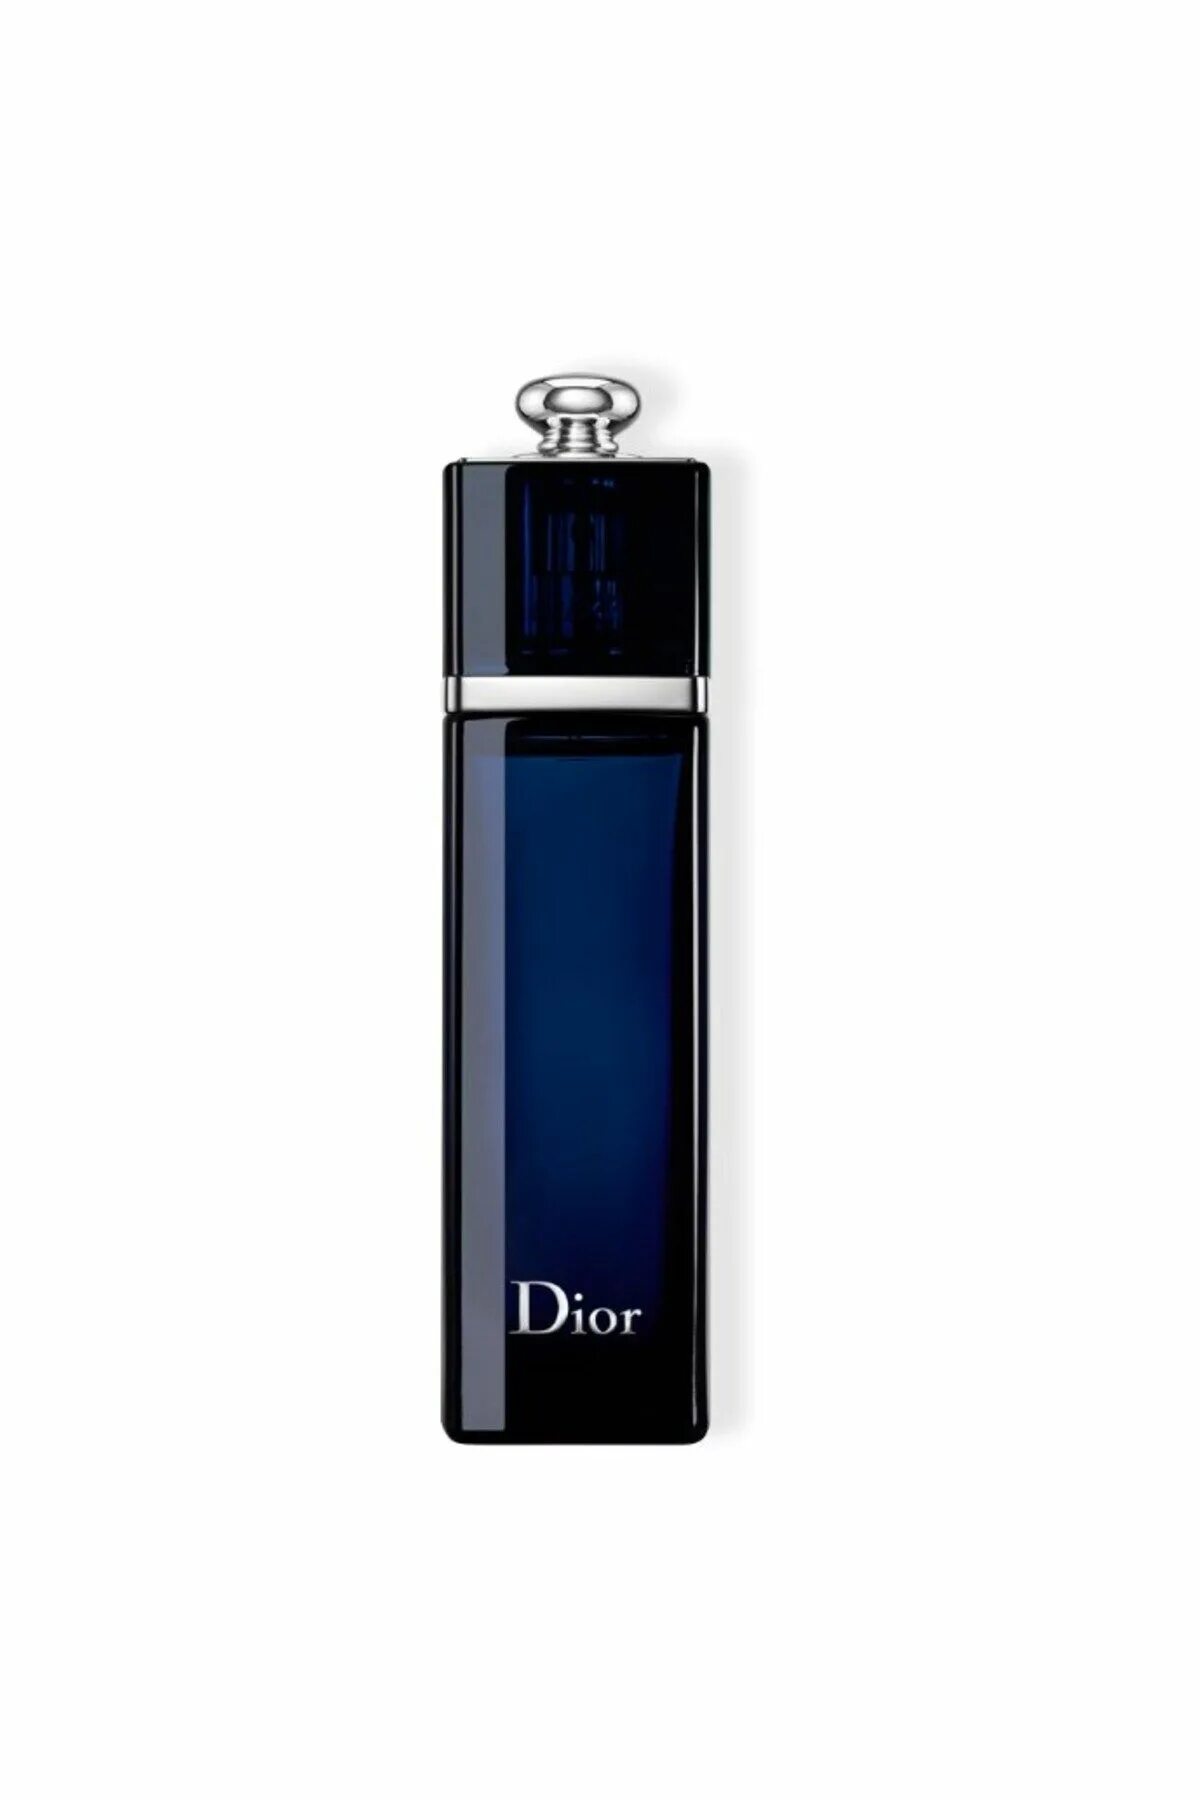 Туалетная вода addict. Christian Dior Addict. Christian Dior Dior Addict. Christian Dior Addict 100 ml EDP. Christian Dior Addict Eau Parfum.